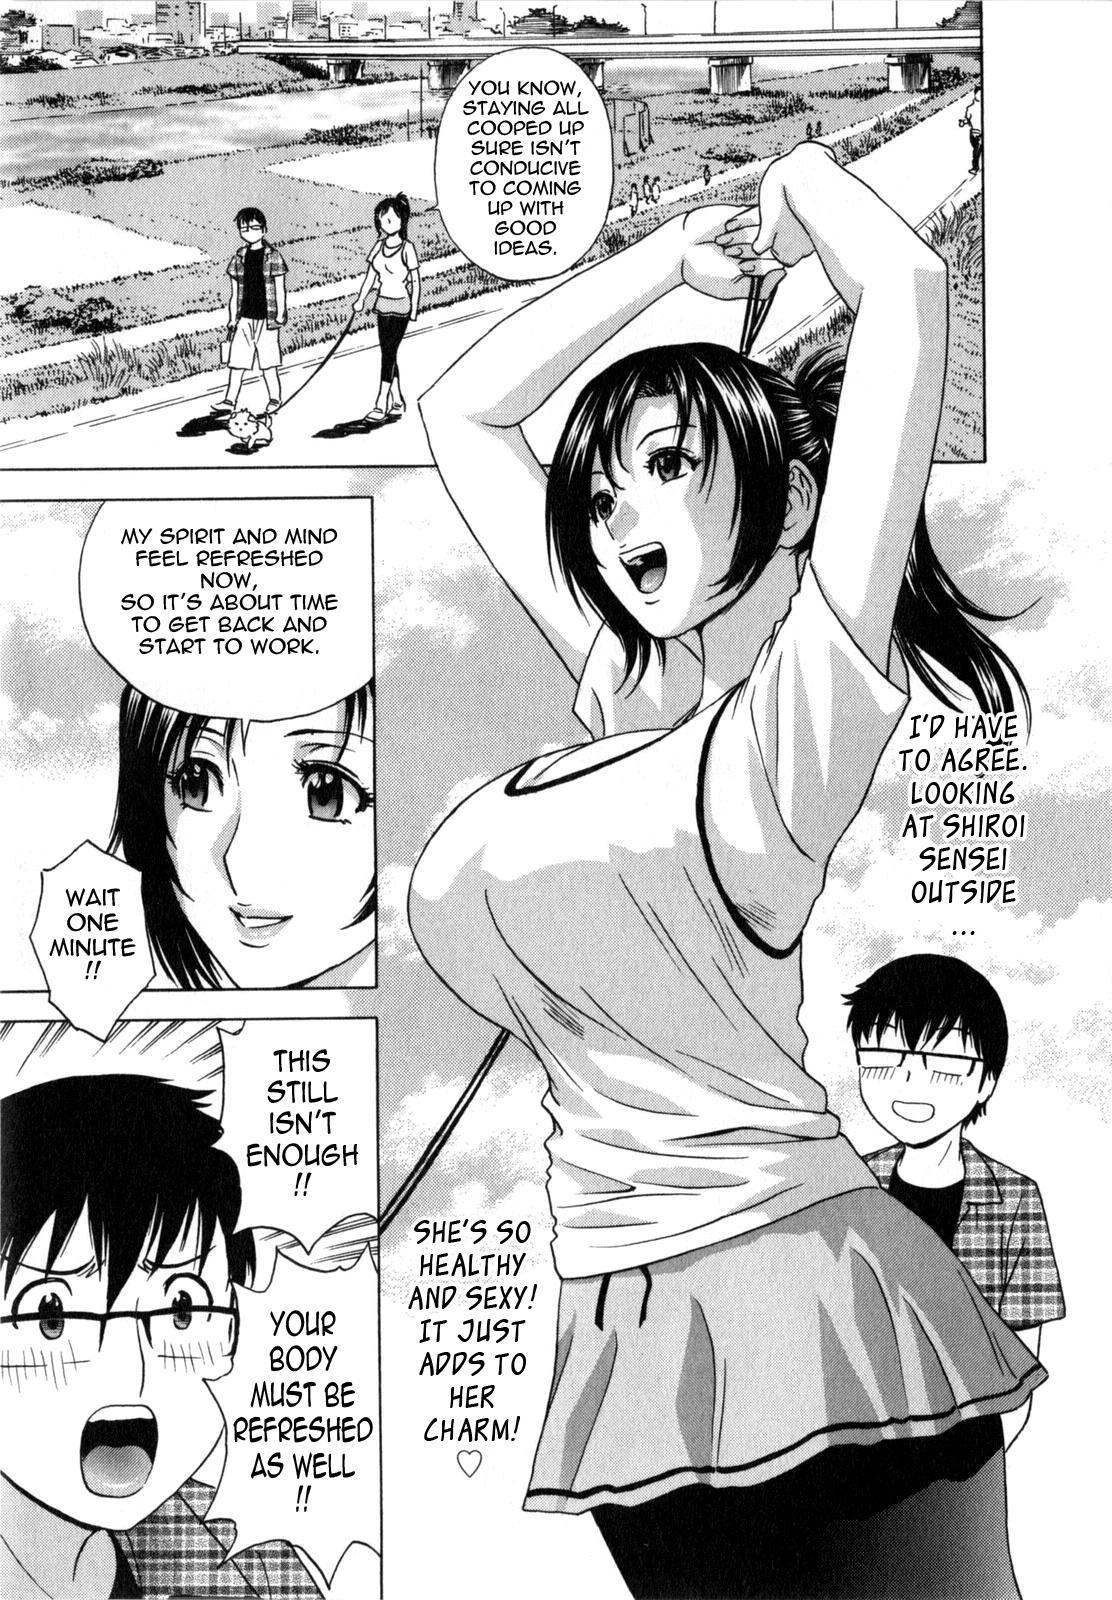 [Hidemaru] Life with Married Women Just Like a Manga 1 - Ch. 1-8 [English] {Tadanohito} 146